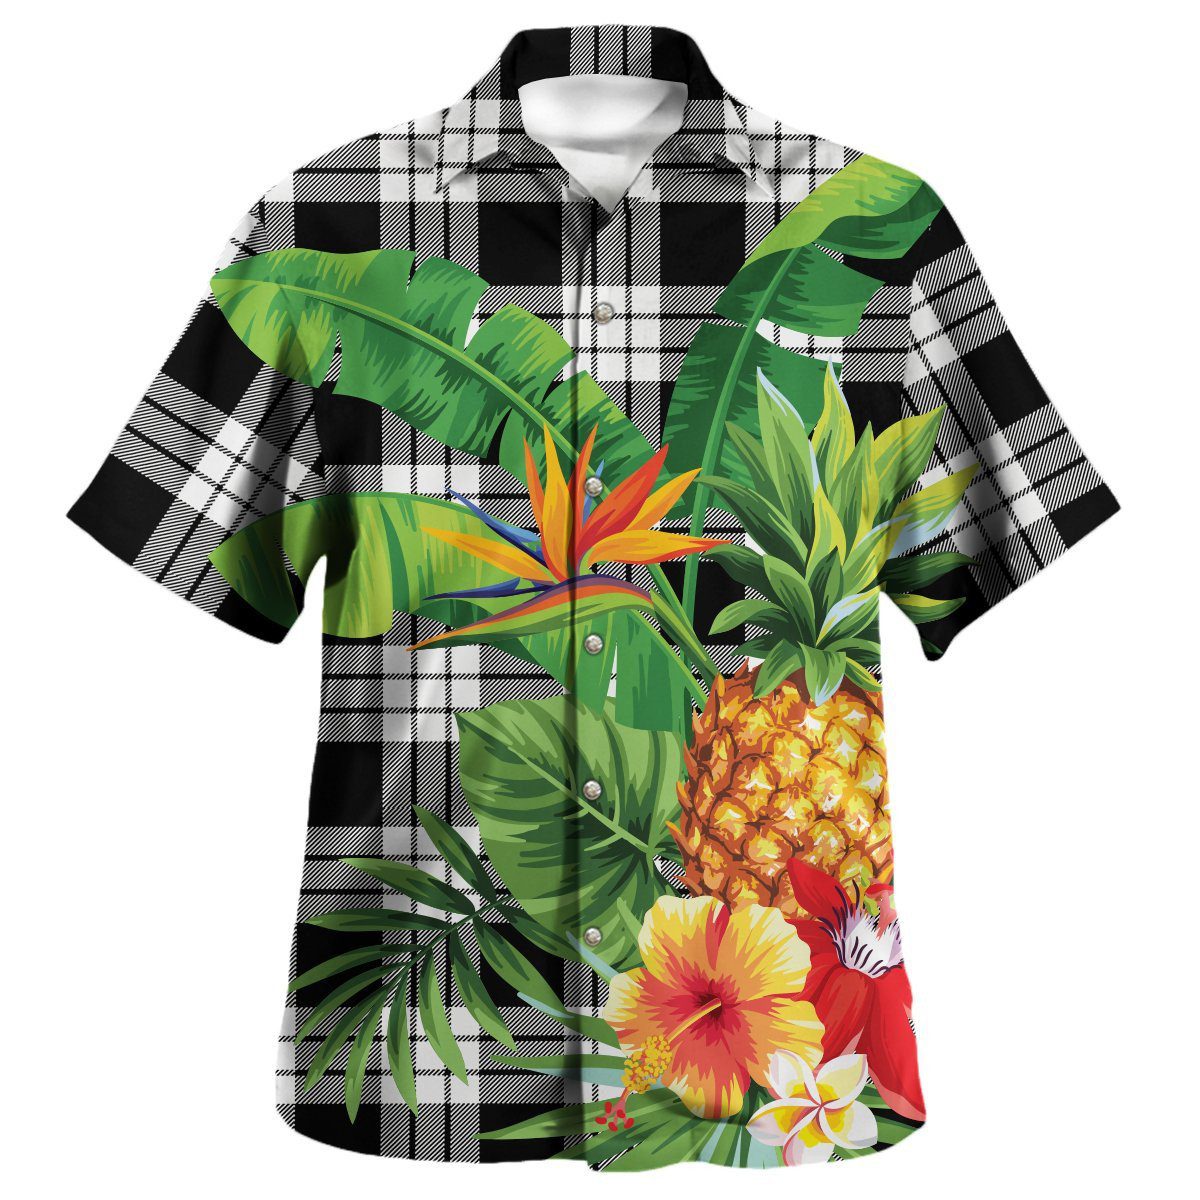 MacFarlane Black & White Tartan Aloha Shirt version 2